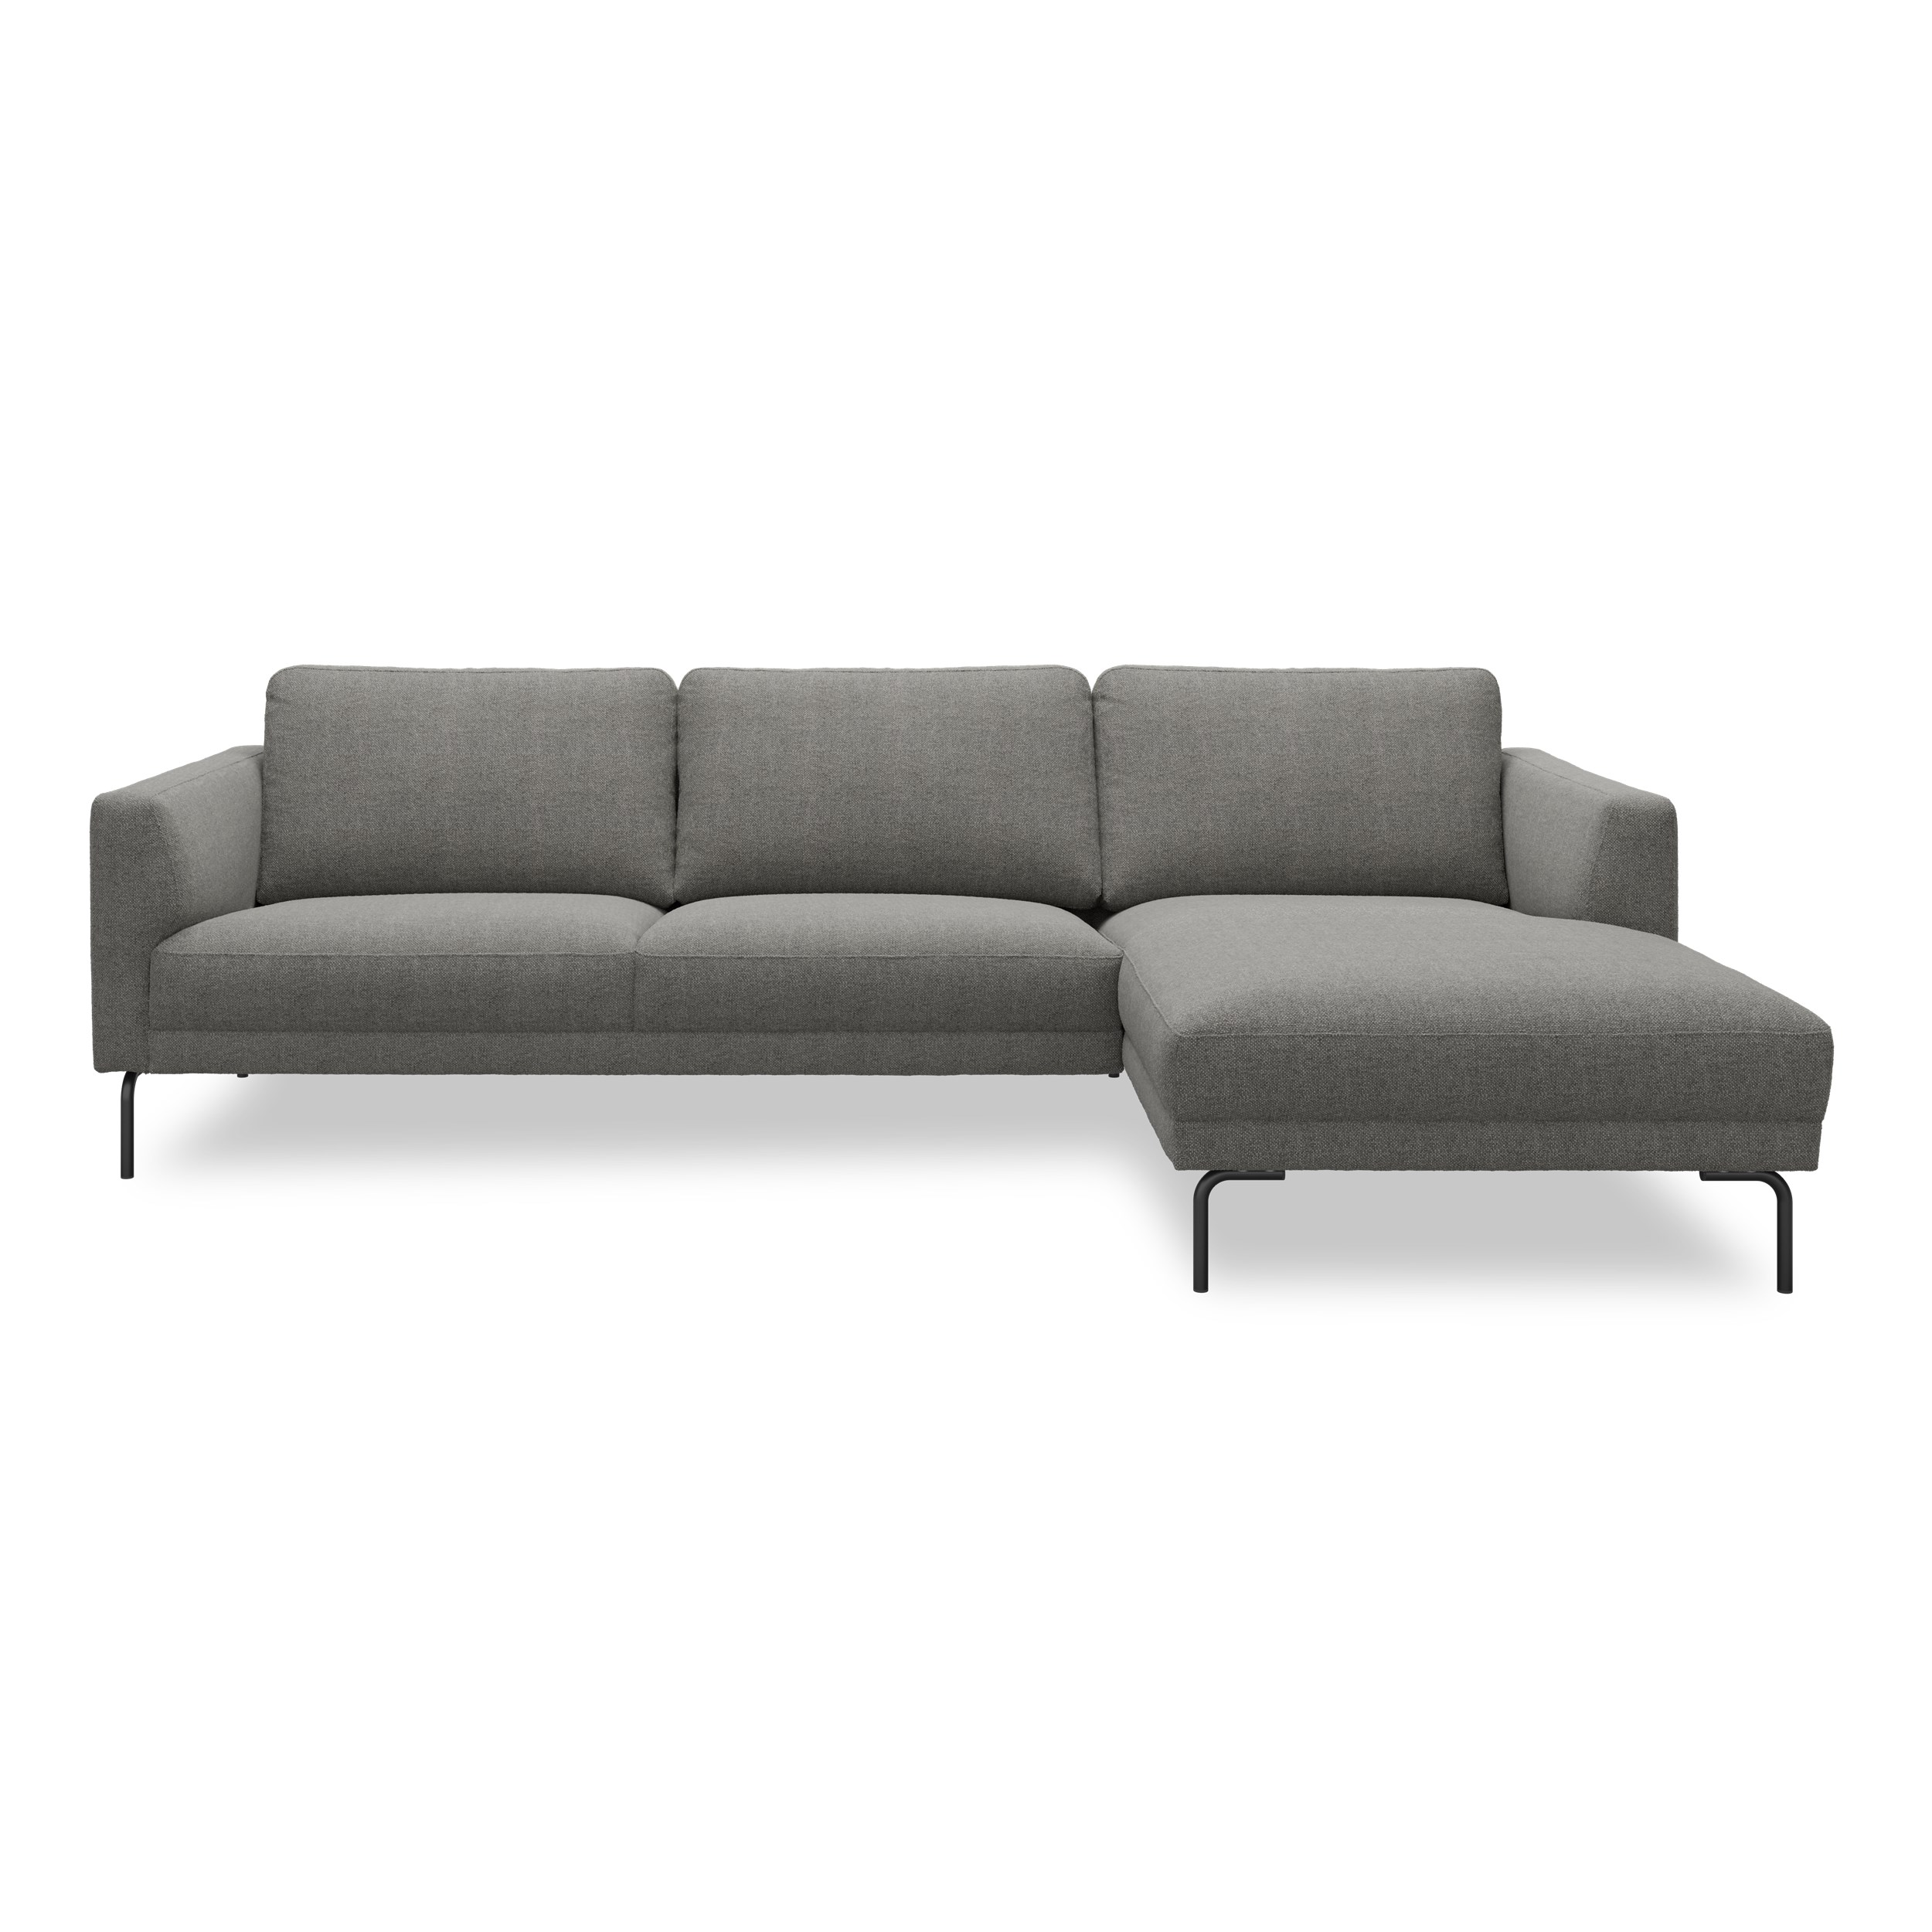 Springfield Sofa med chaiselong - Rate 68 Dark grey stof og ben i sort metal